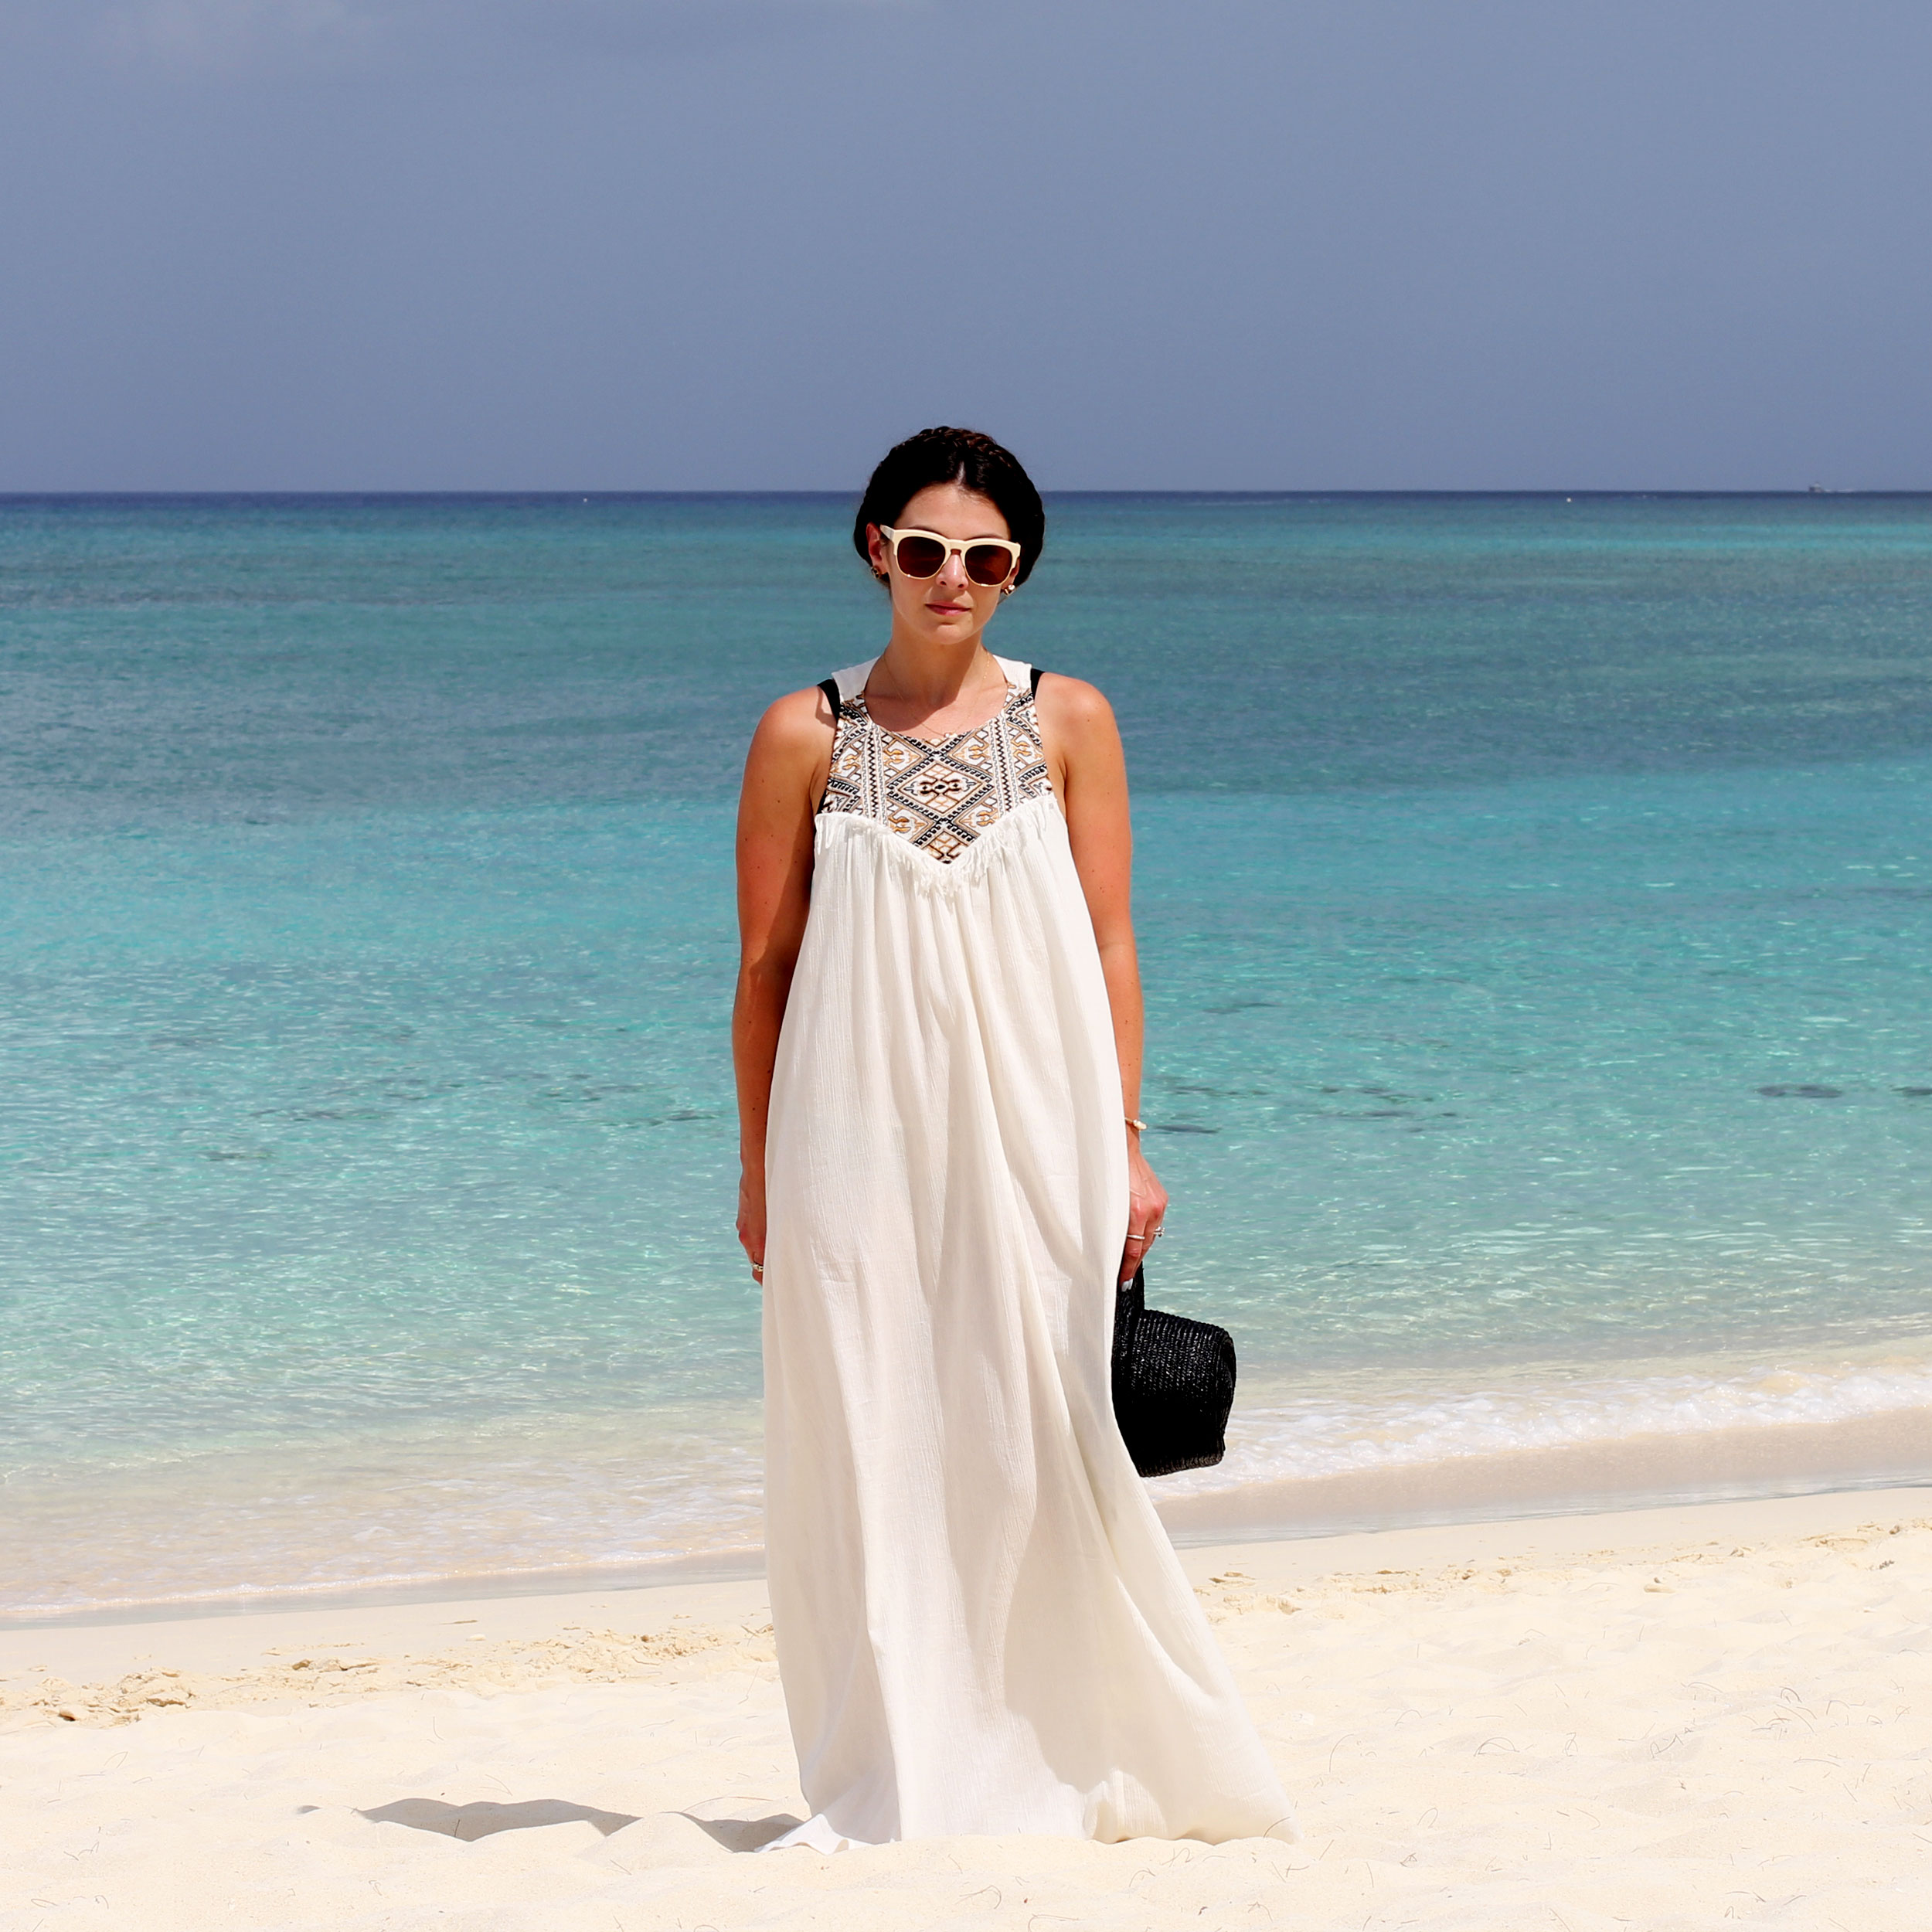 Volcom Under The Moon Maxi Dress, Beach Style, Fashion Blogger, Grand Cayman, Summer Style, Beach, Maxi Dress Coverup, Milkmaid Braids, Wildfox Wayfarer Sunglasses